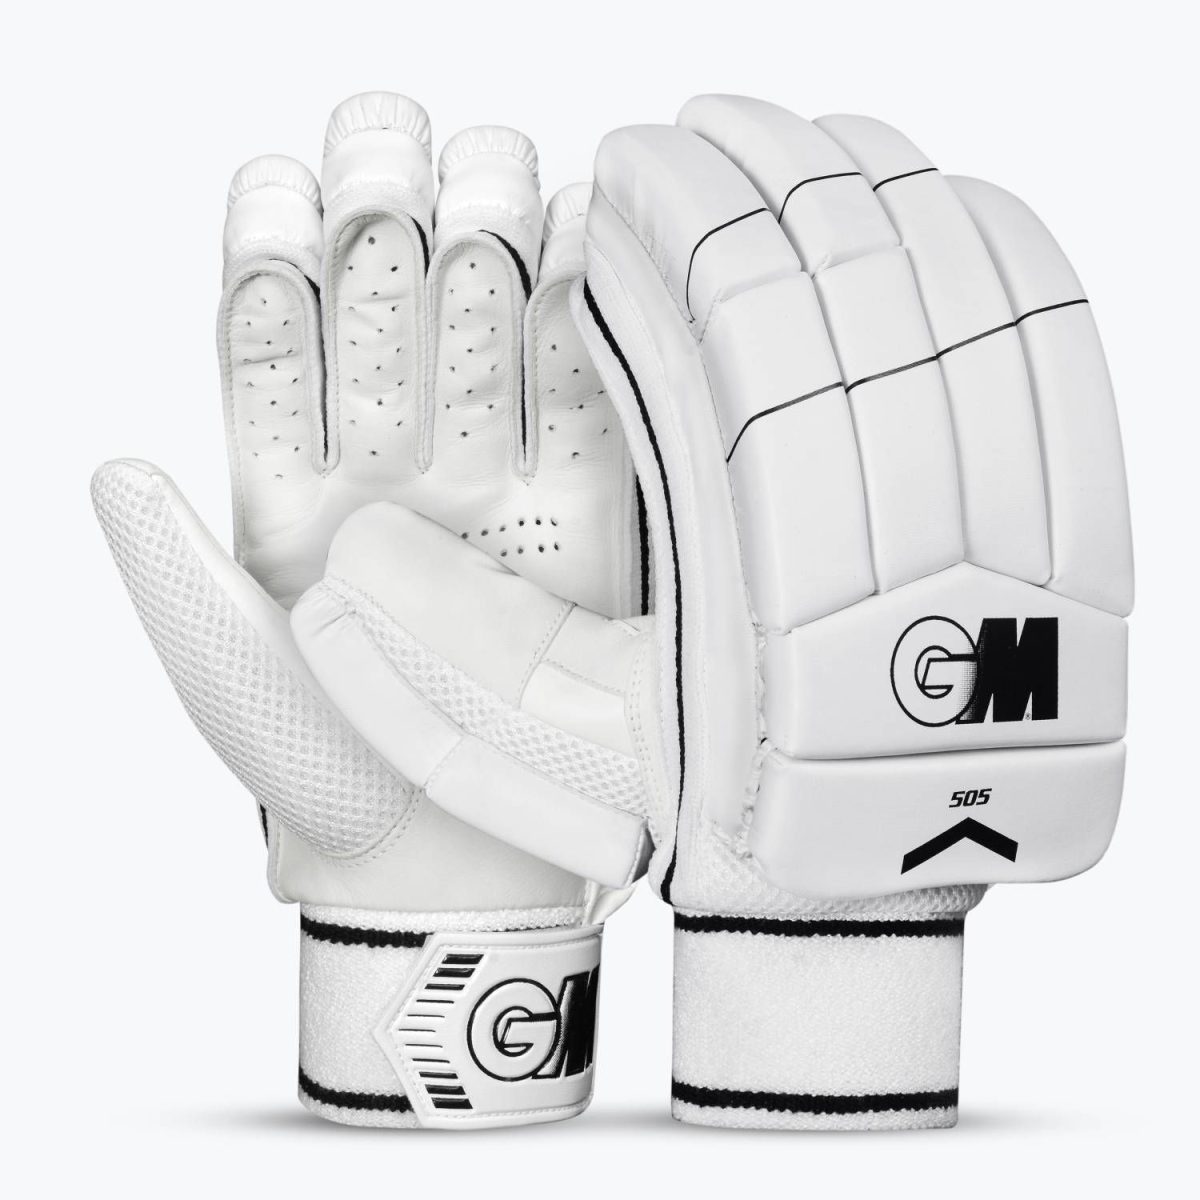 GM 505 Batting Gloves - MENS